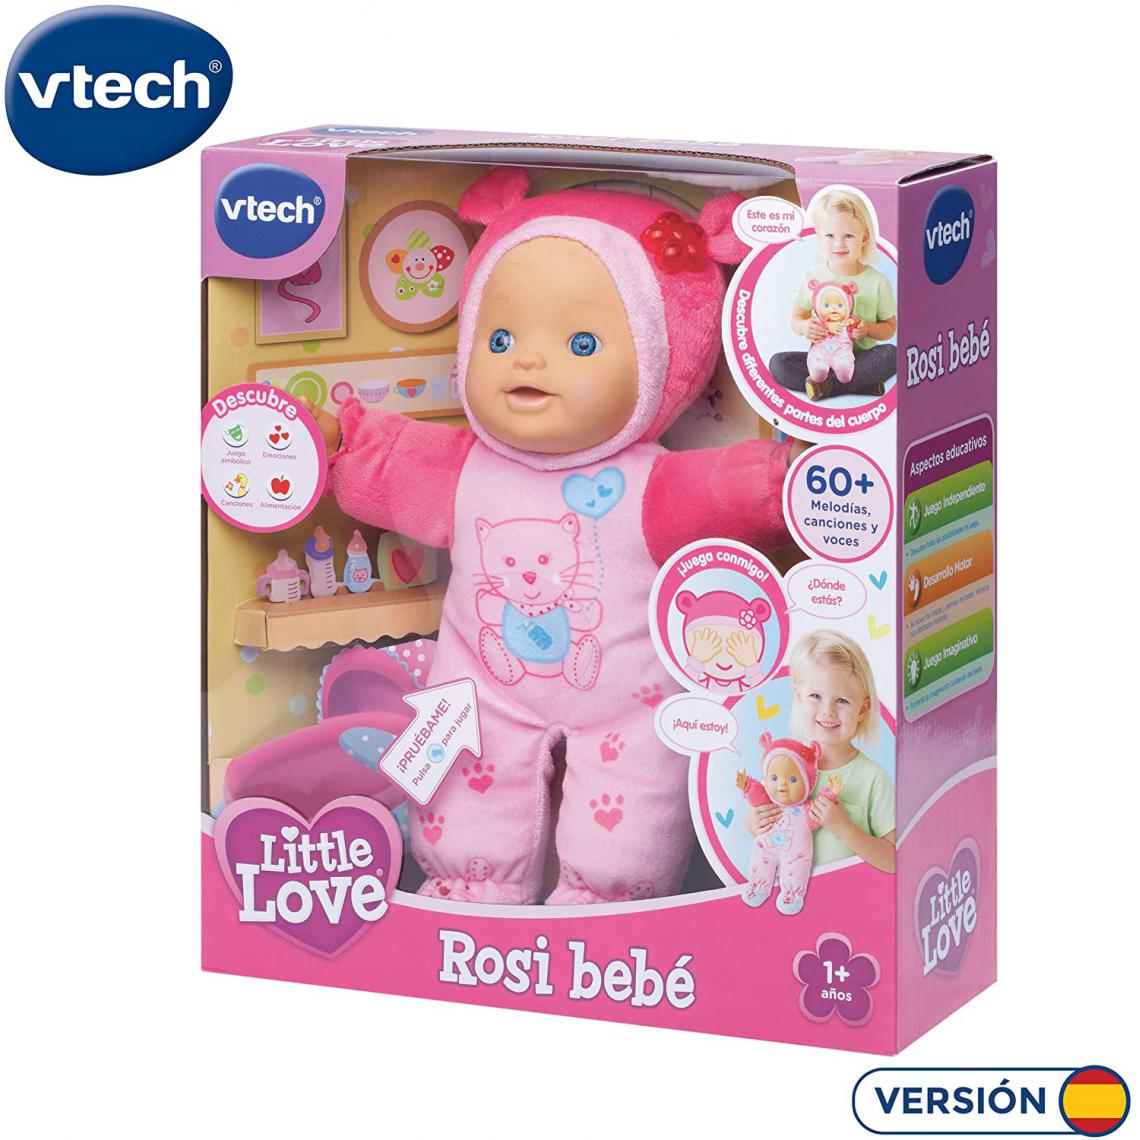 Vtech - VTech ? Little Love Rita aprende a Parler, poupée Interactive Little Love - Rosi 19.3 x 15.5 x 9.1 - Poupons